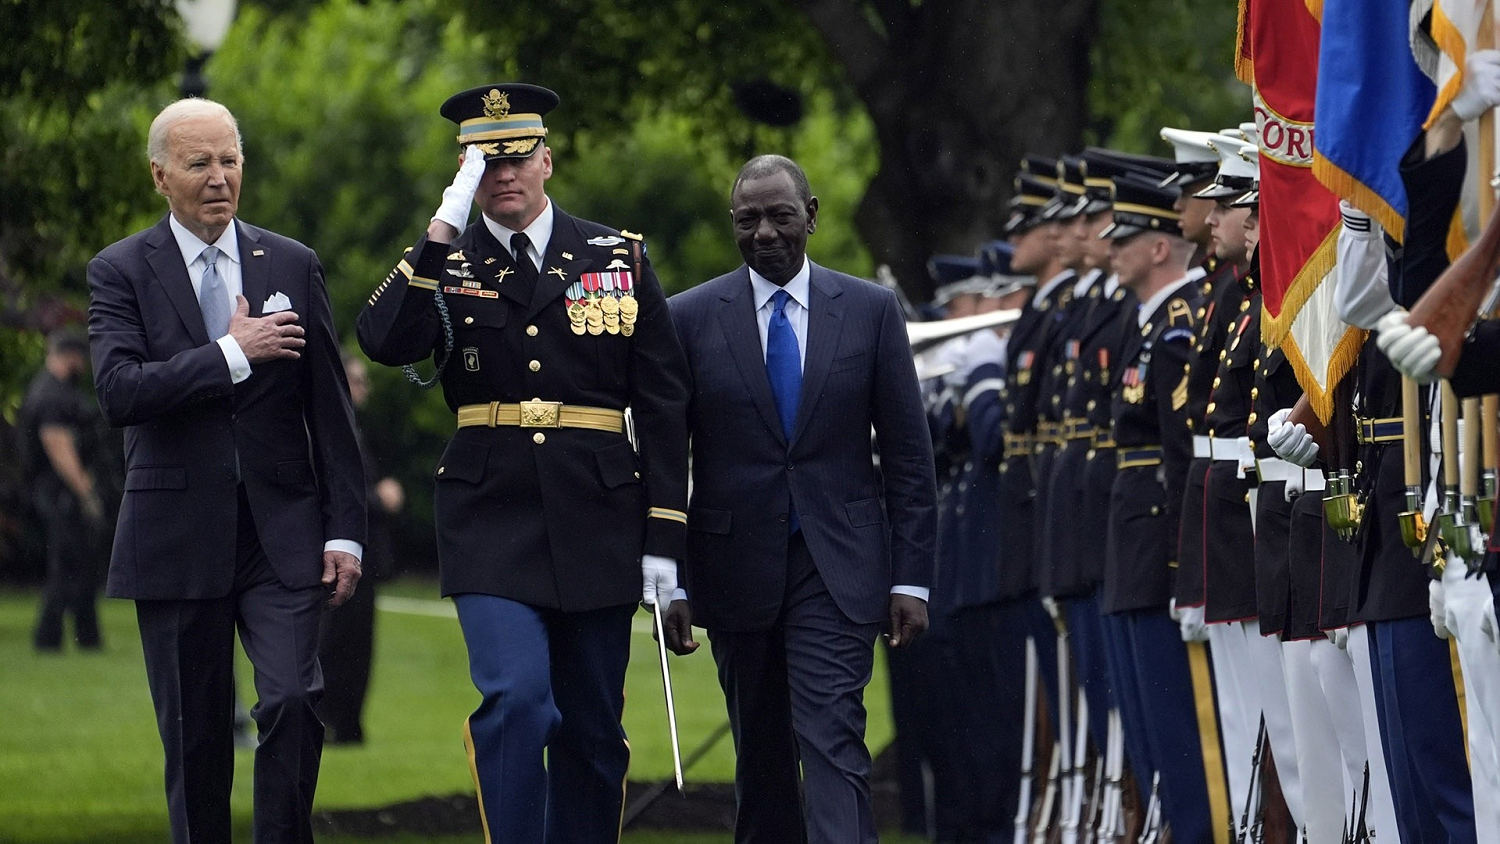 Biden welcomes president of Kenya to the White House